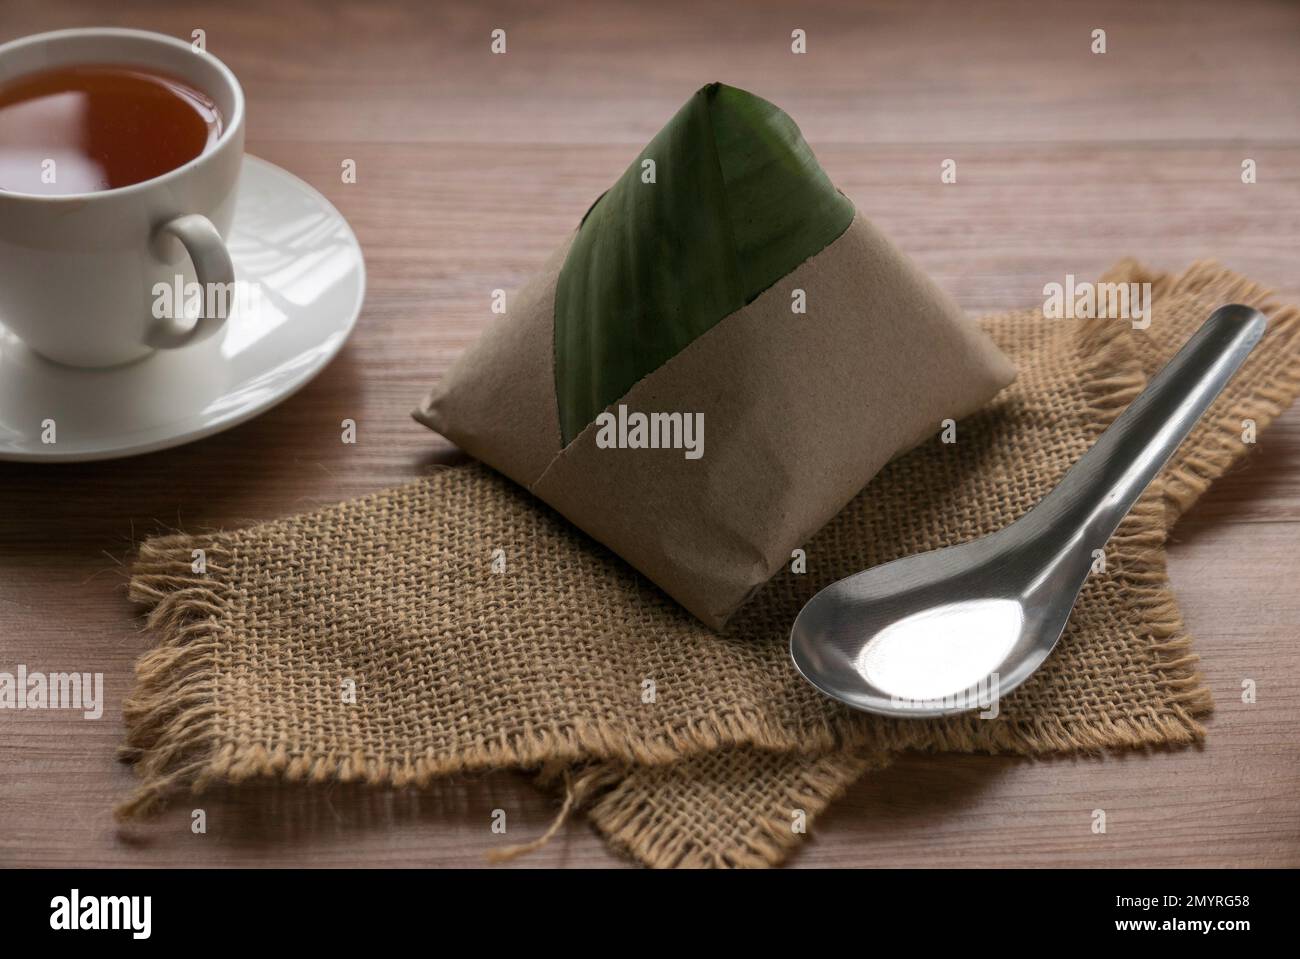 Nasi lemak , a popular malaysia breakfast serve with a cup of tea. Stock Photo